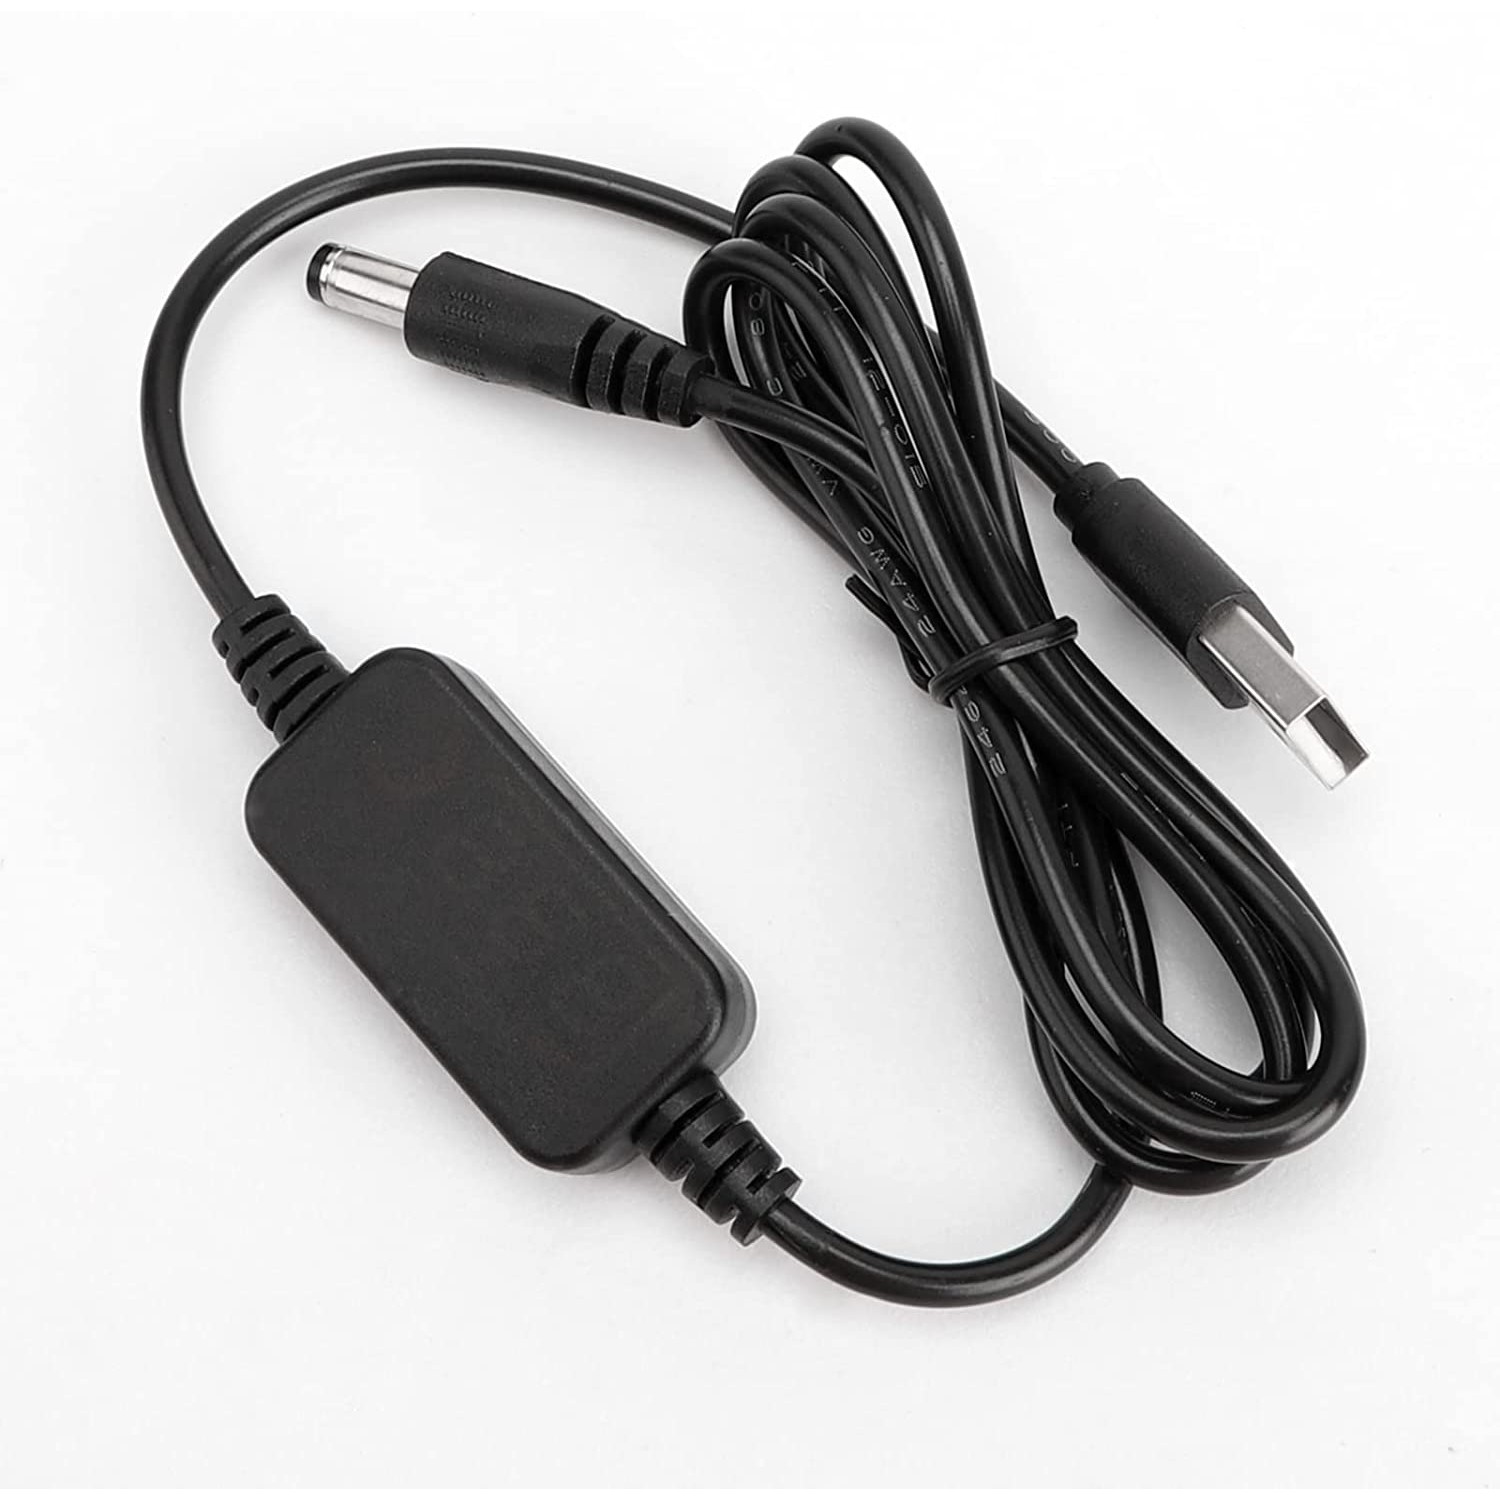 USB to 12v, DROK 5v to 12v USB Cable Boost Converter Step Up to 12V, 1A  Power Converter with LED Display Volt Transformer 5.5mm Port 1.2m Length